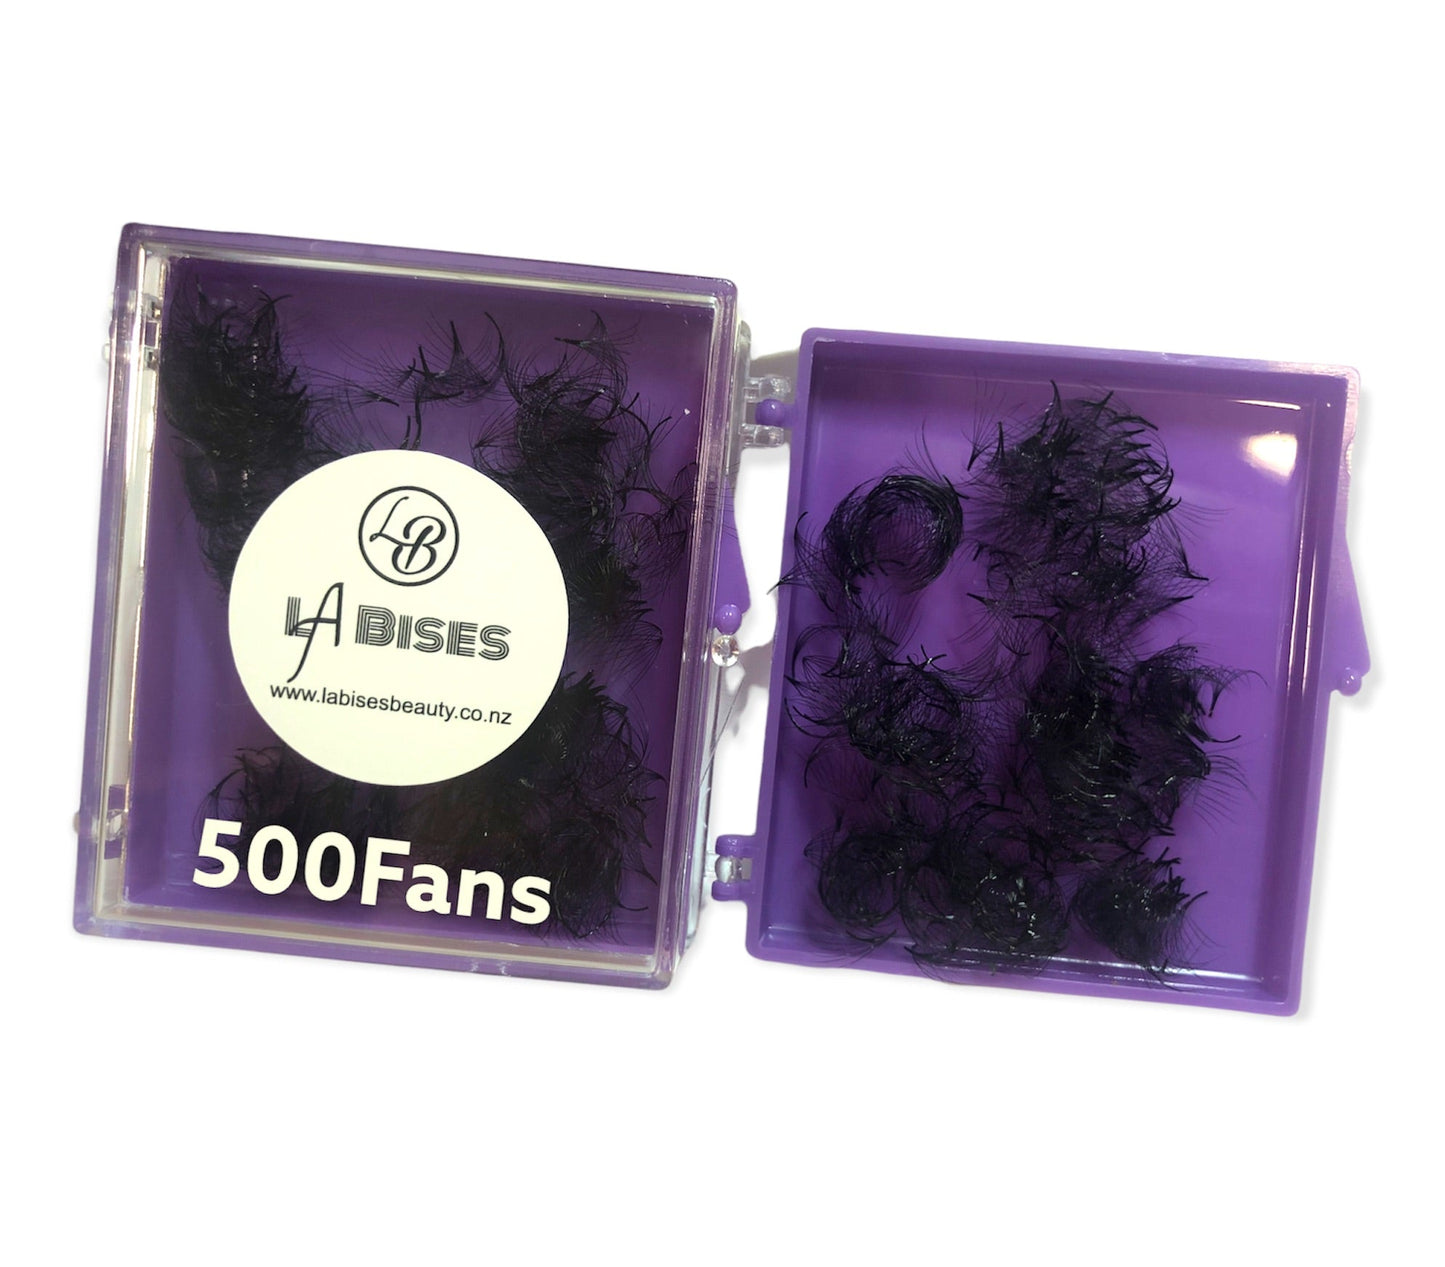 8D - 500 Fans - CC Curl -0.07mm  Pre-handmade Volume Fan Eyelash Extensions Supply